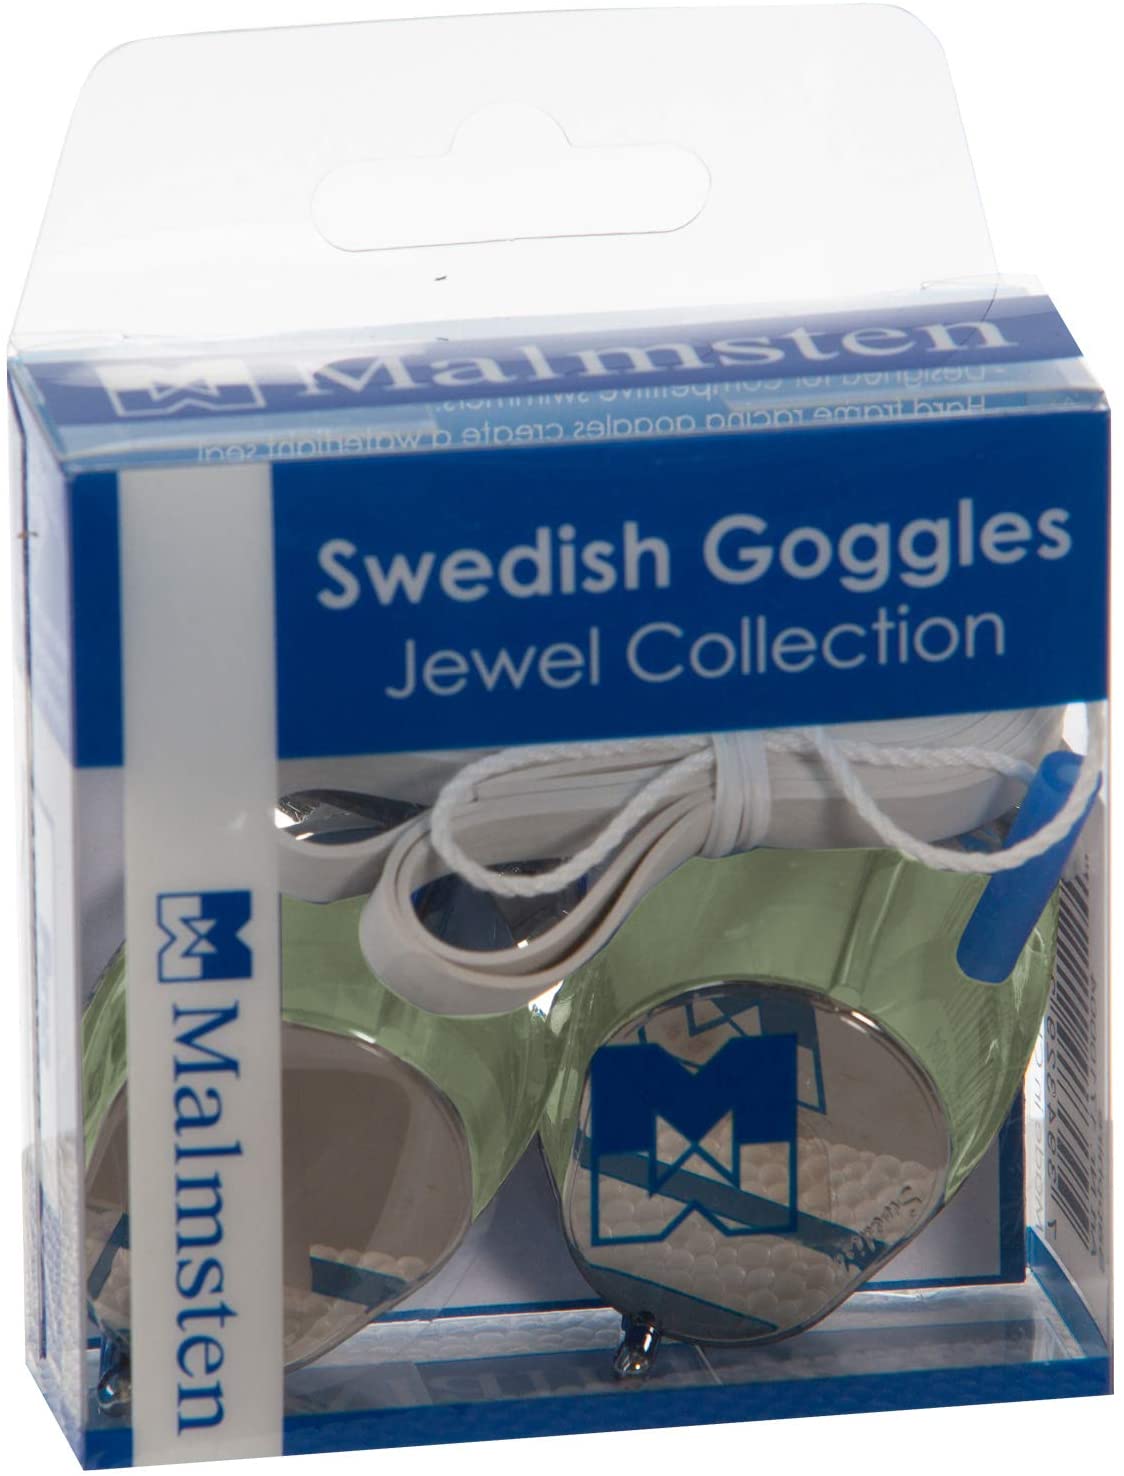 
Disassembled Malmsten swedish goggles
